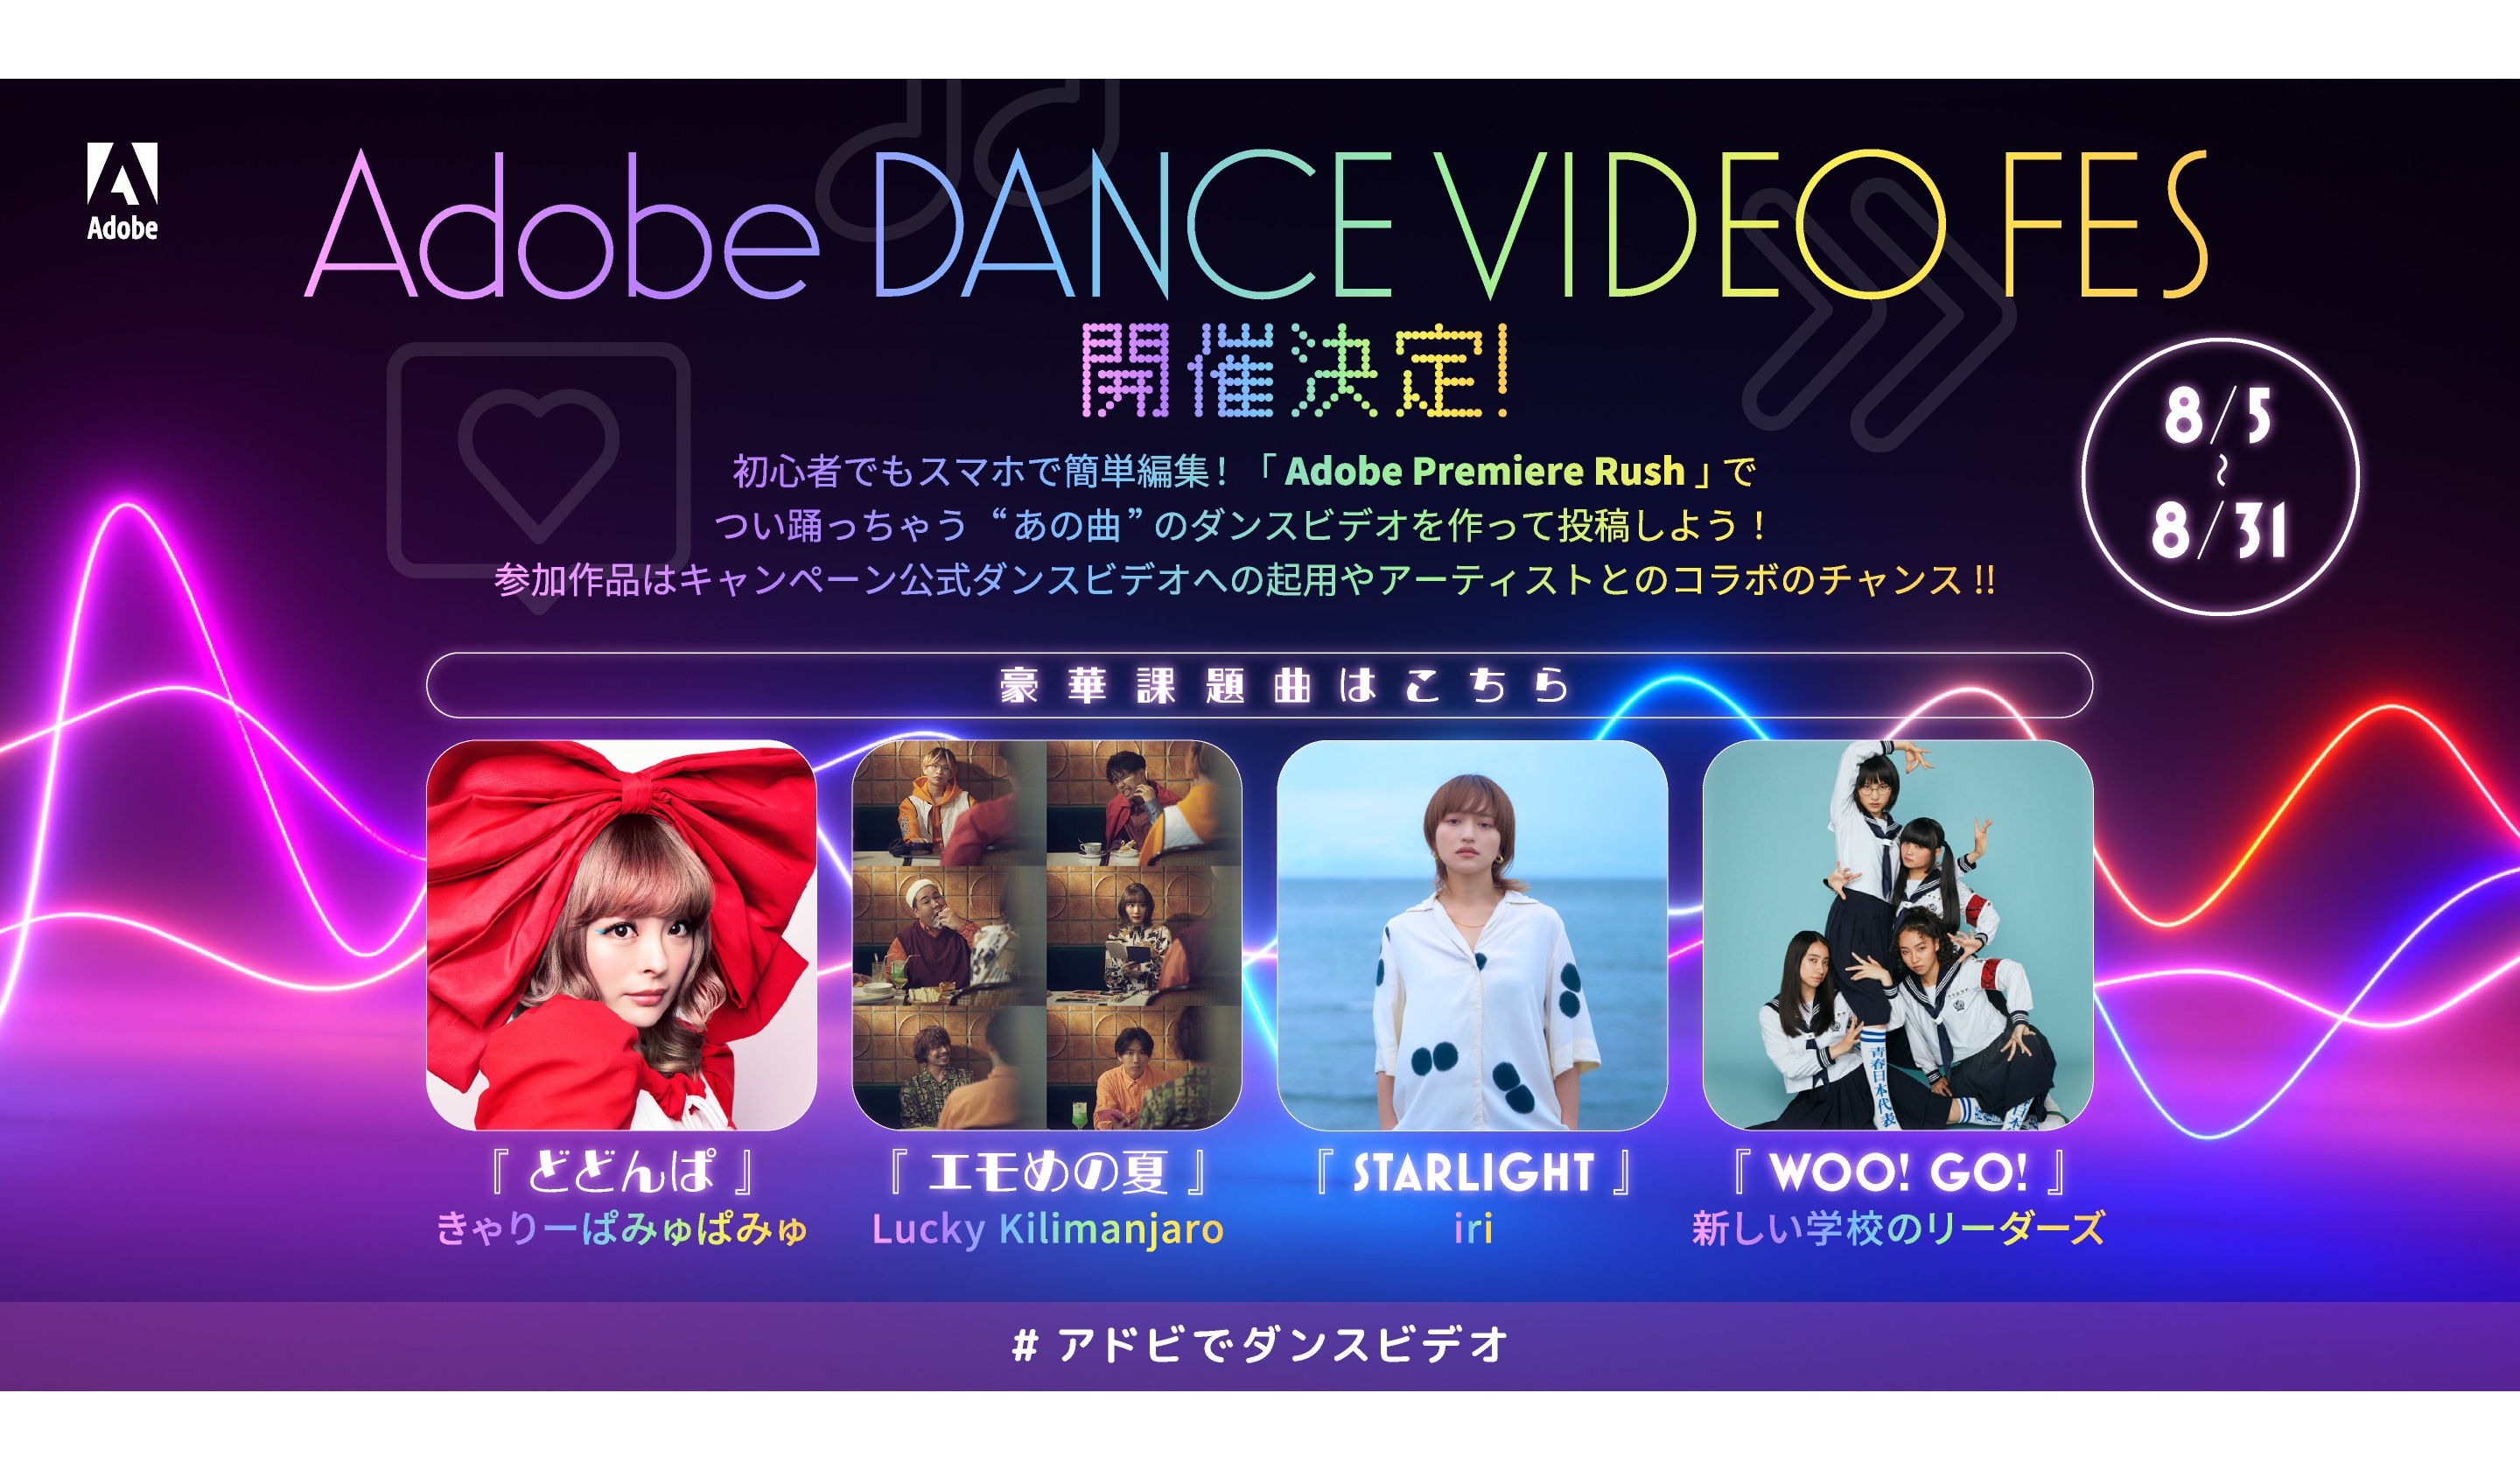 Adobe DANCE VIDEO FES1